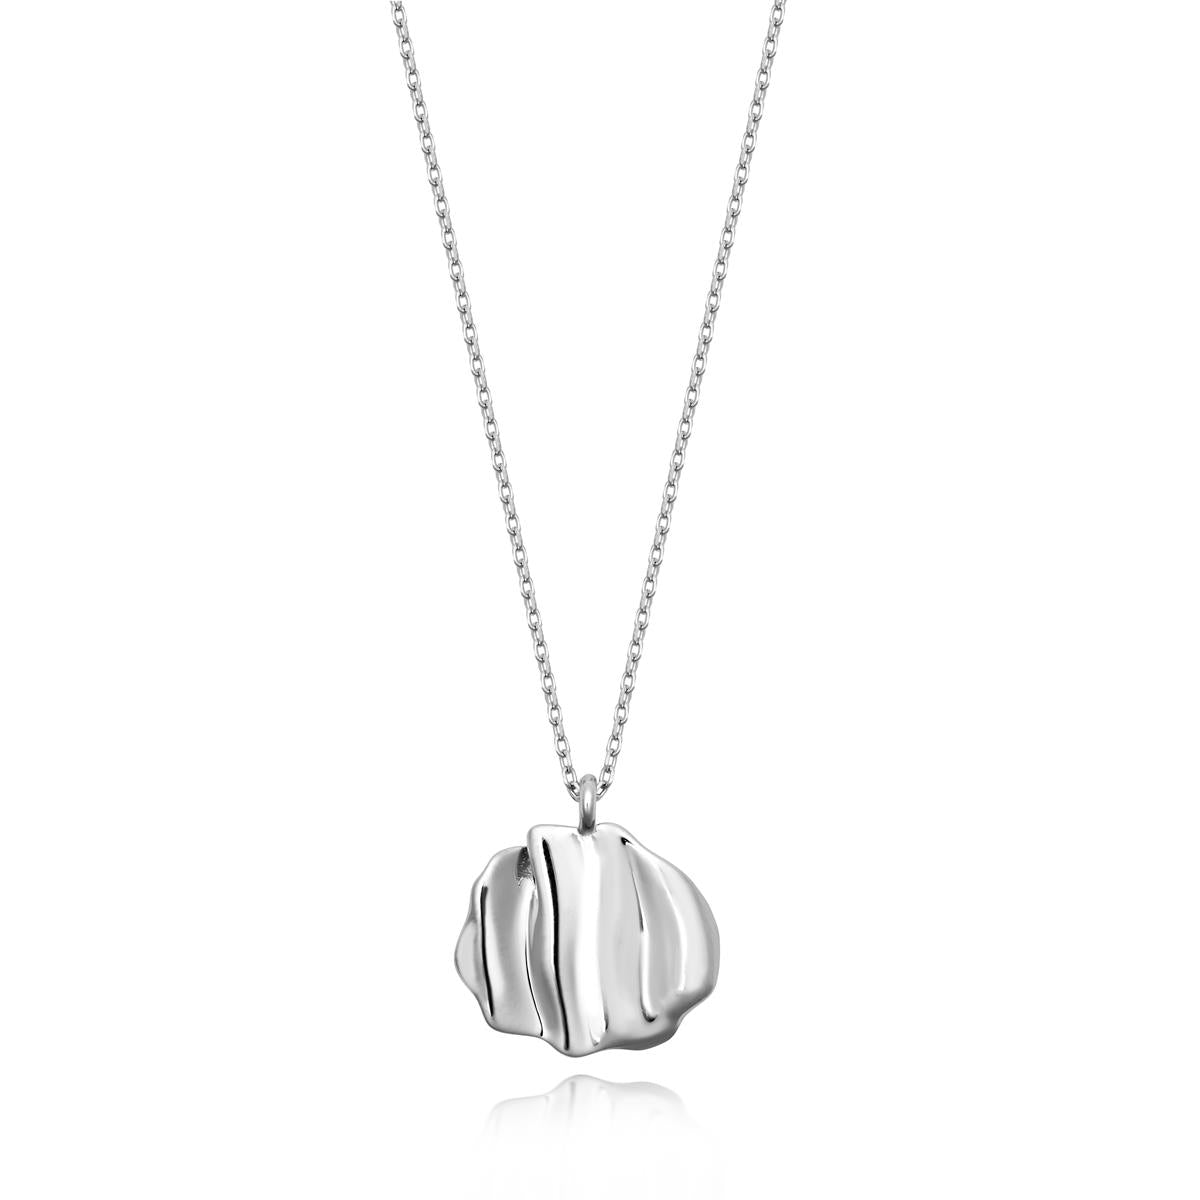 Achara Round Ruffle Pendant Necklace - Silver 